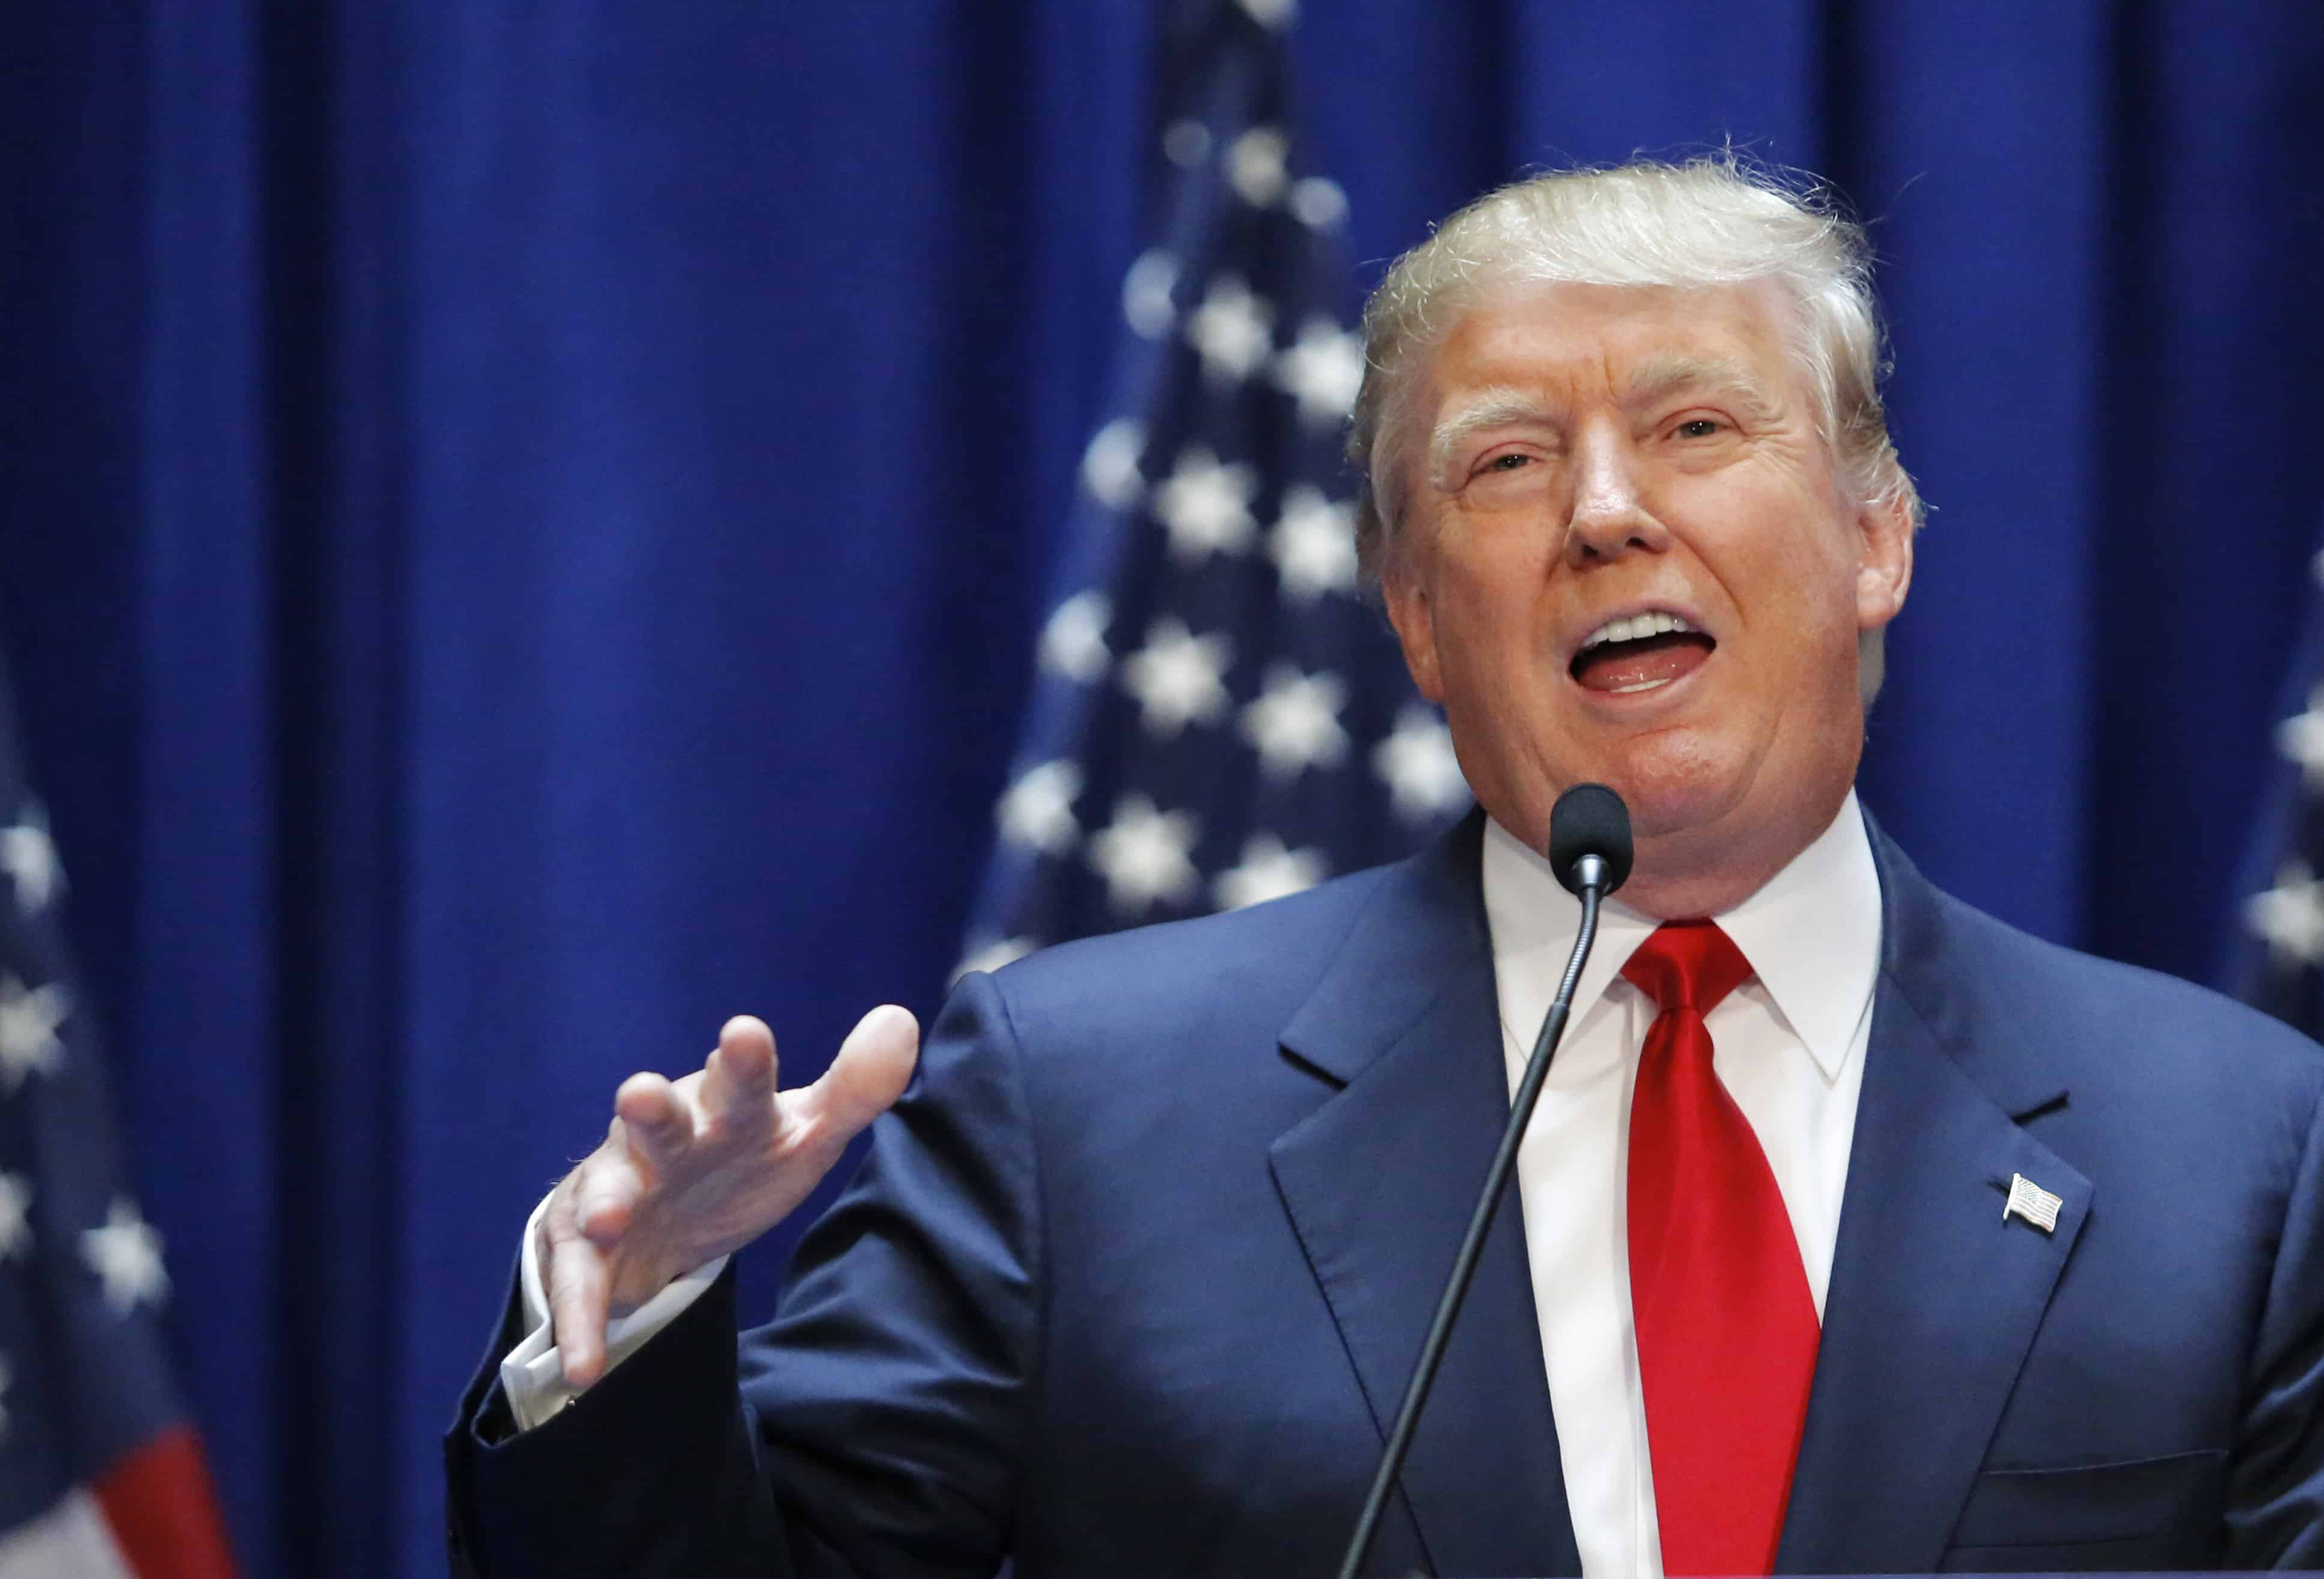 Real estate mogul Donald Trump announces his bid for the presidency.